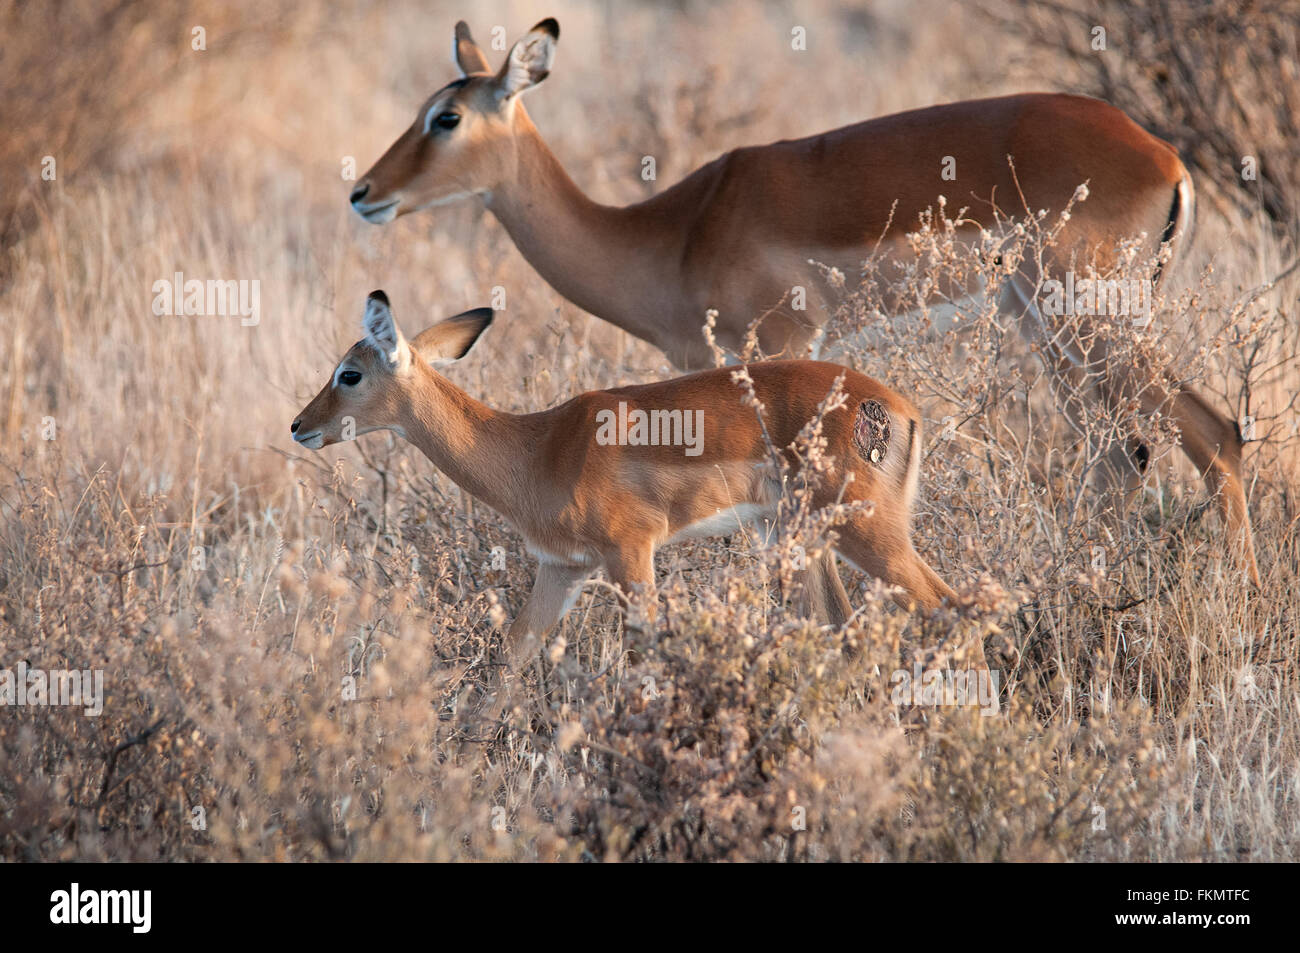 Mother & Calf Impala (Aepyceros melampus), Calf has injury to its rear flank, Samburu National Reserve, Kenya, East Africa Stock Photo